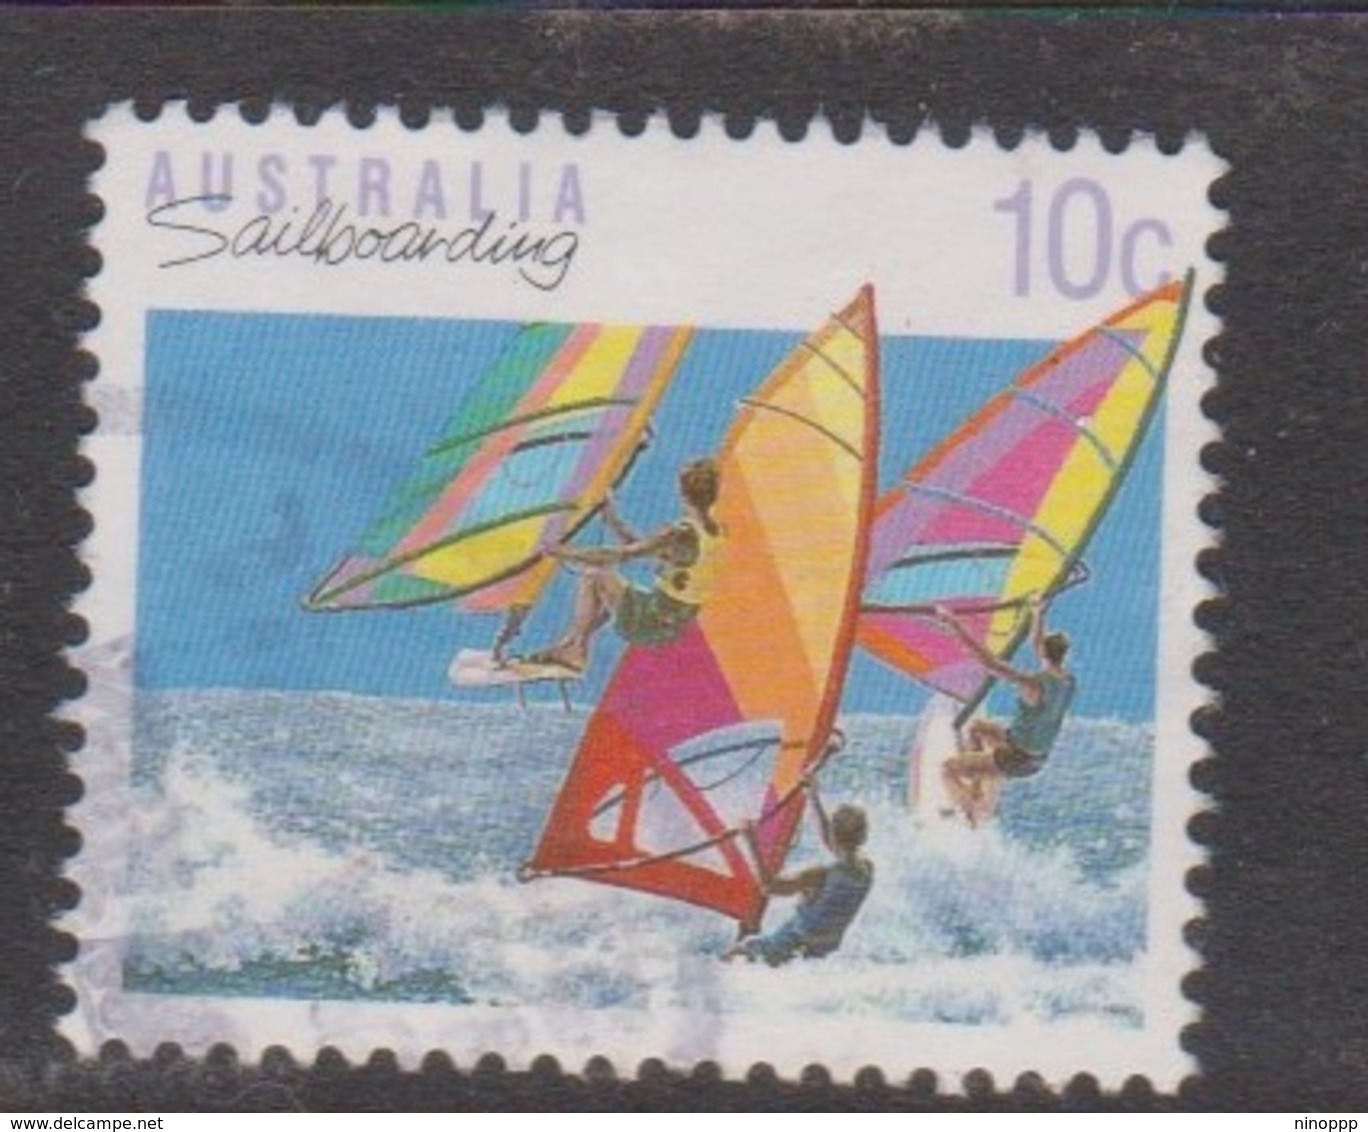 Australia ASC 1228b 1990 Sports 10c Sailboarding Perf 14 X 14.5, Used - Proeven & Herdruk